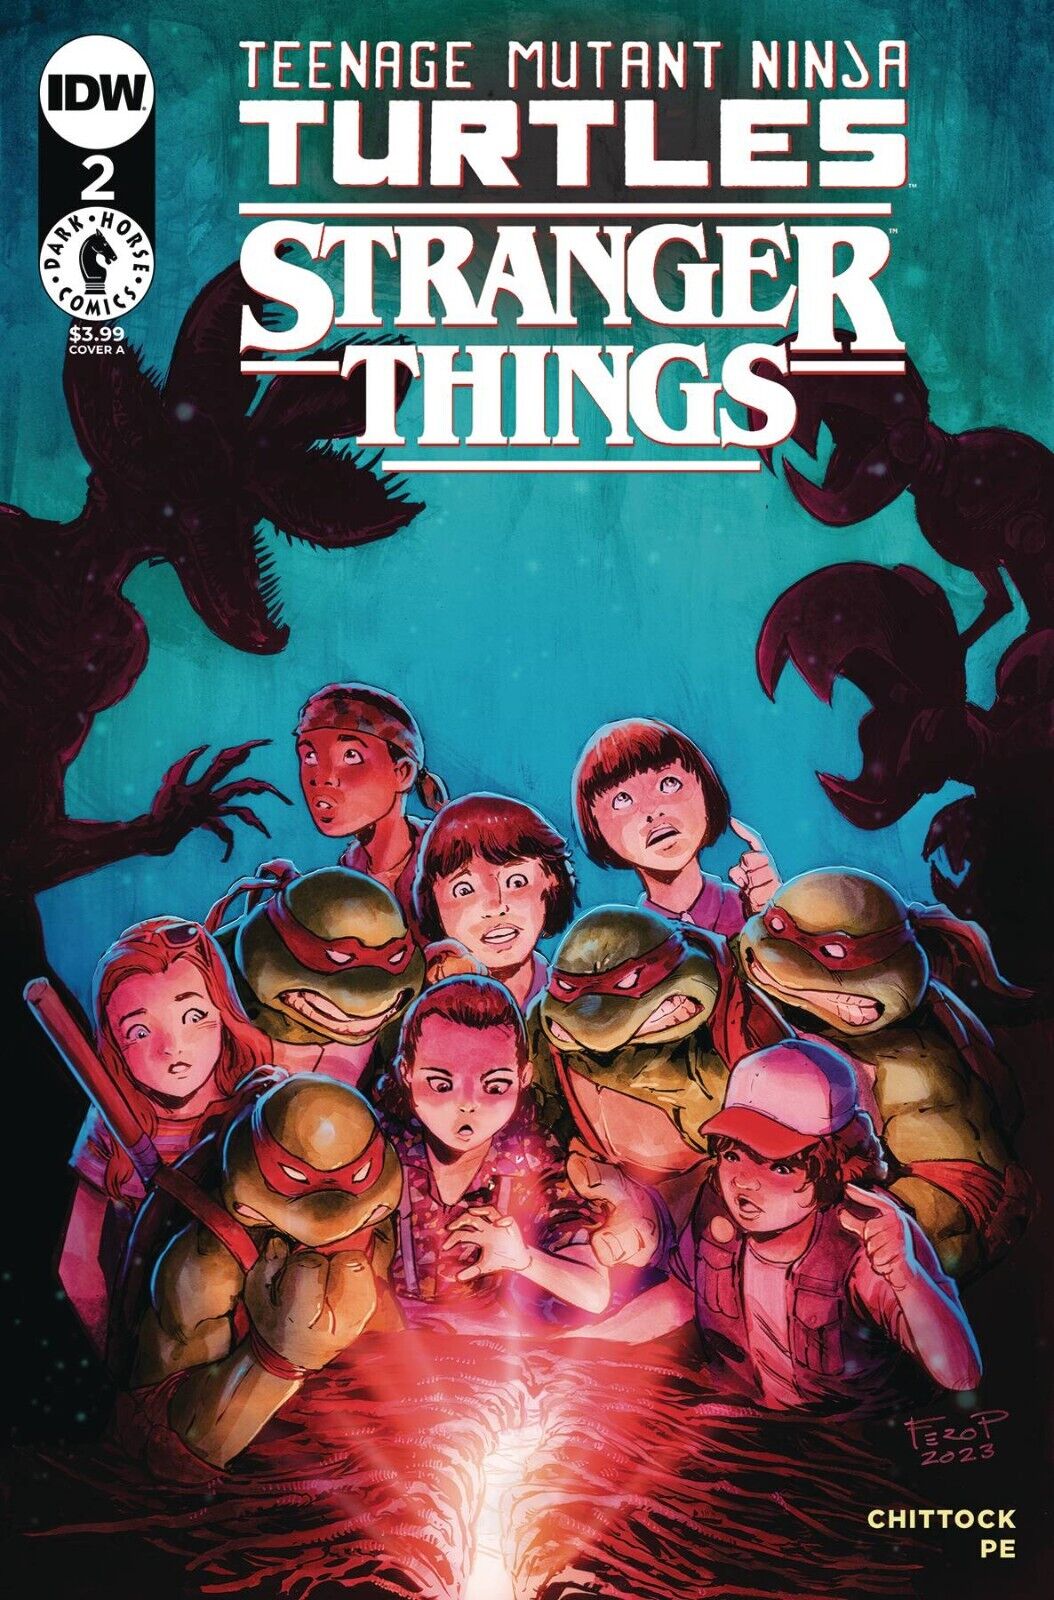 TMNT Ninja Turtles/Stranger Things #2 (IDW) Cover A, B, C, D - 1st printing (NM)